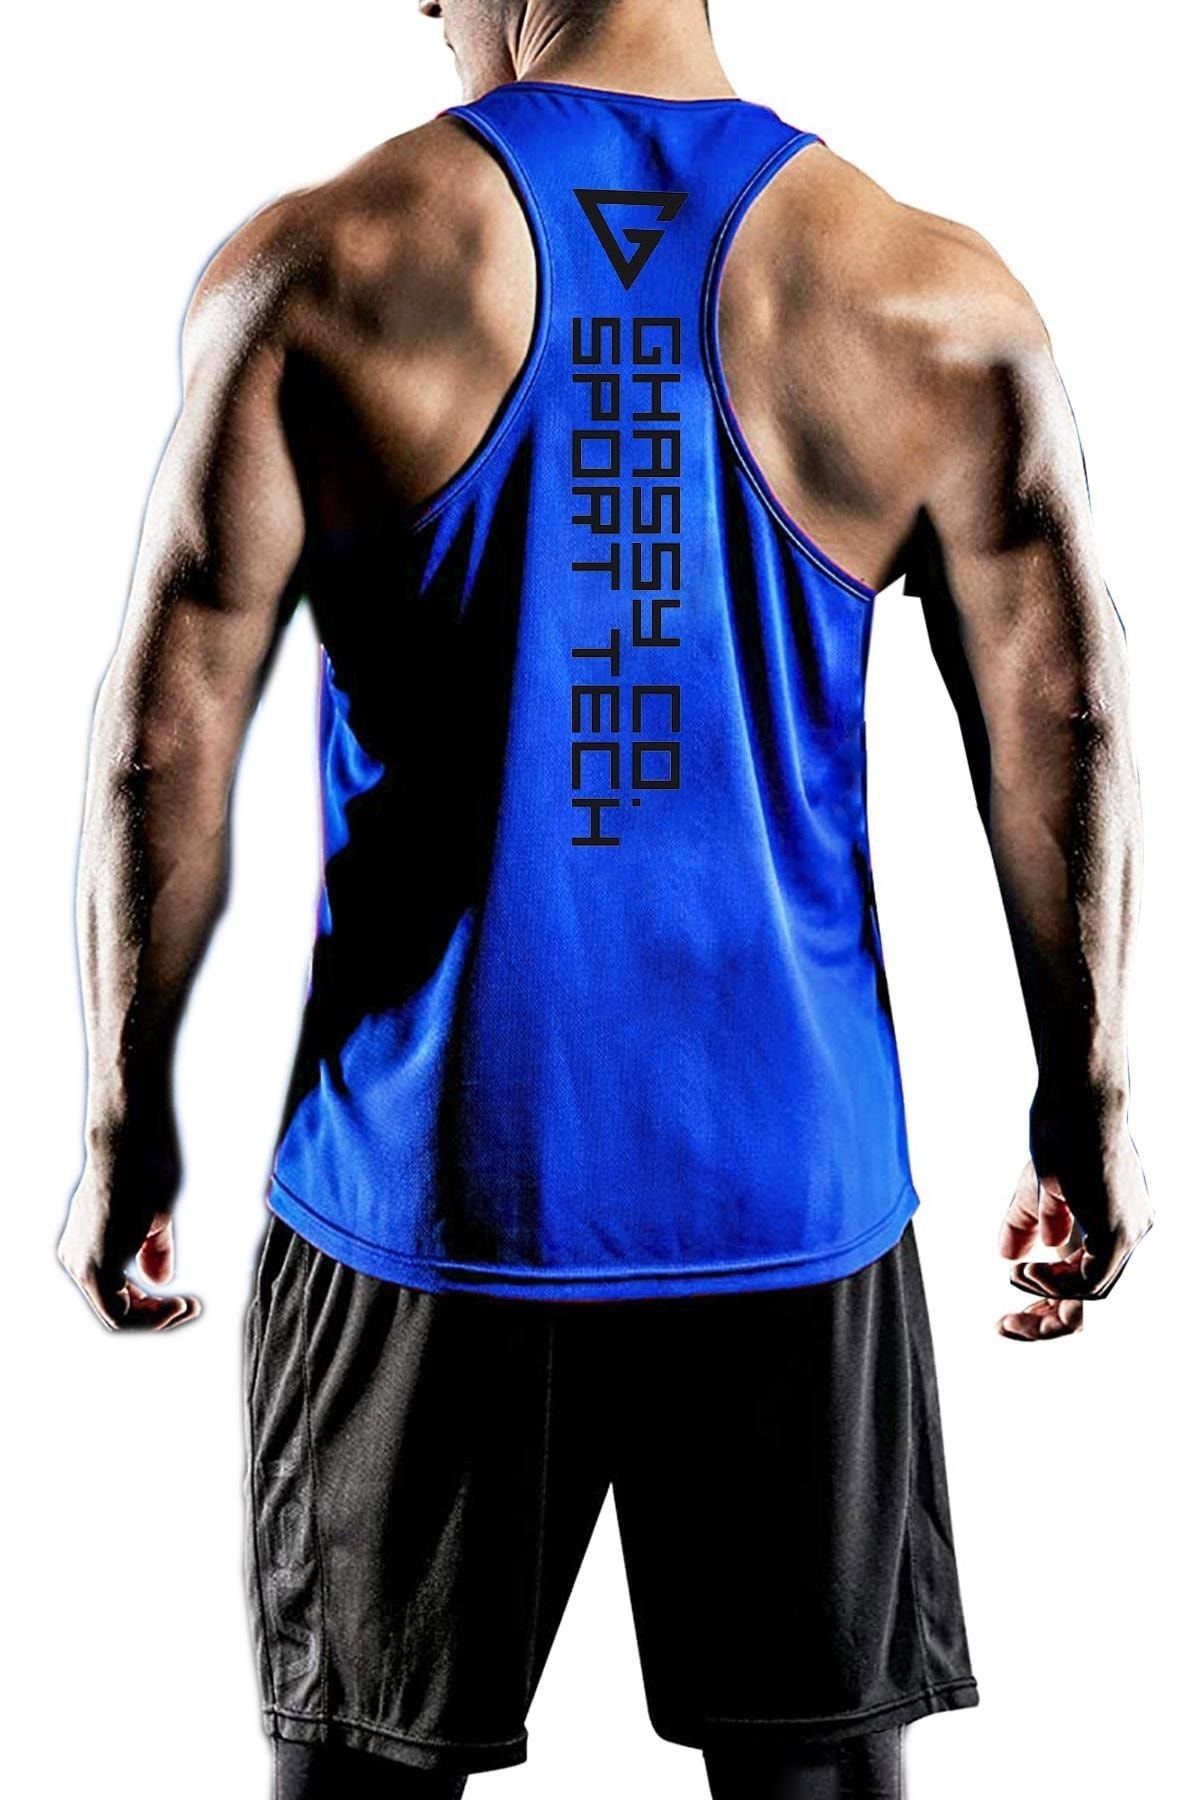 Ghassy Co Erkek Dry Fit Y-back Gym Fitness Sporcu Atleti Gym-101